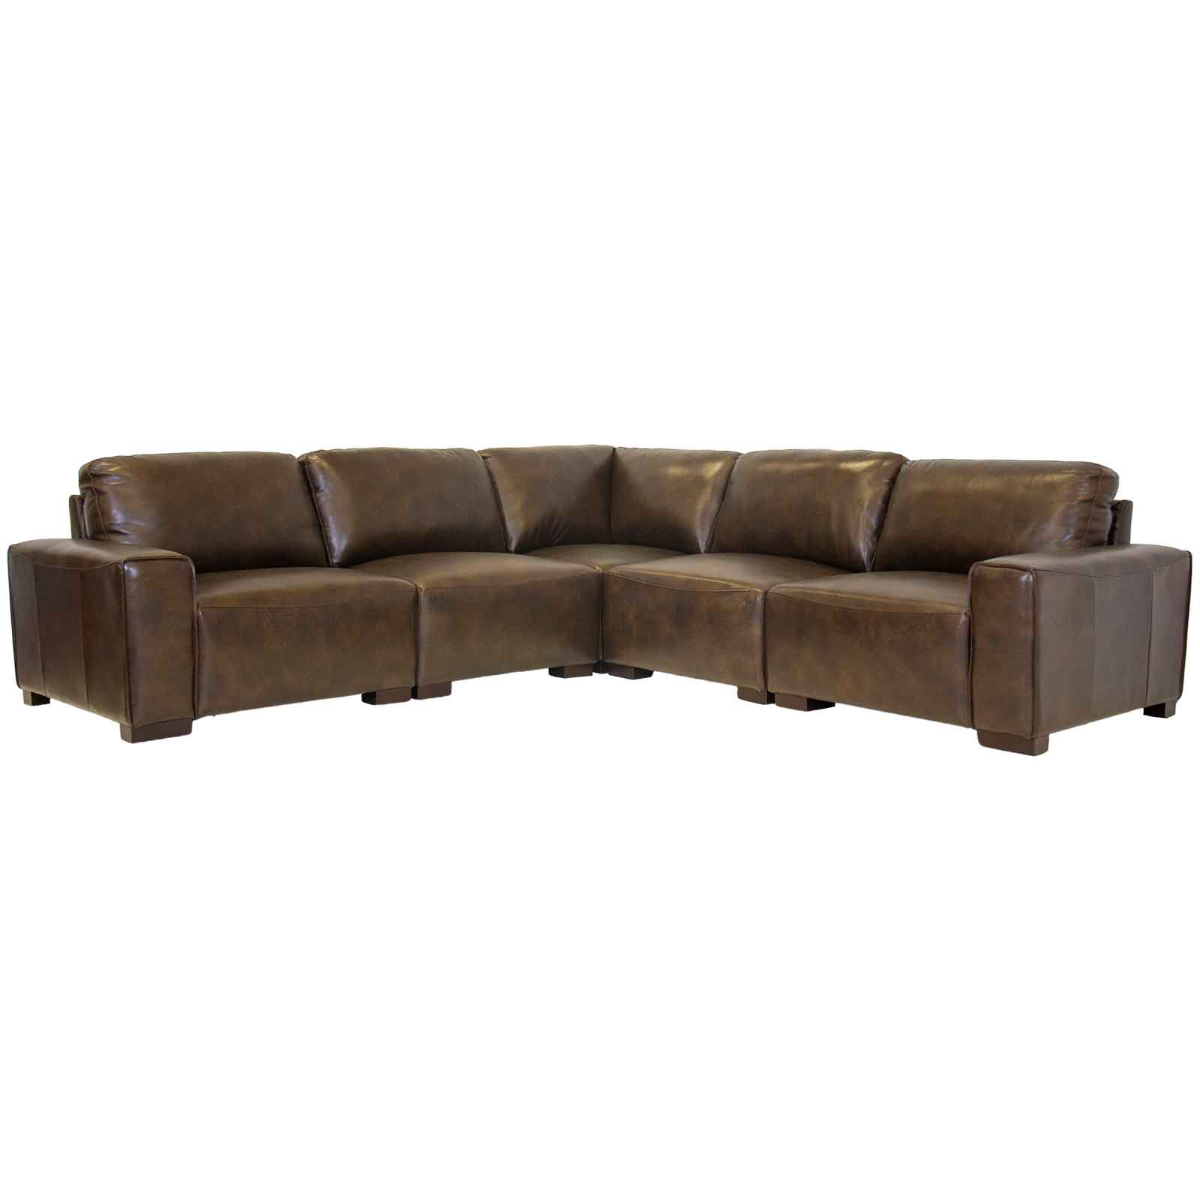 Leather Italia Bohemian Chestnut Leather 5 piece Sectional Sofa